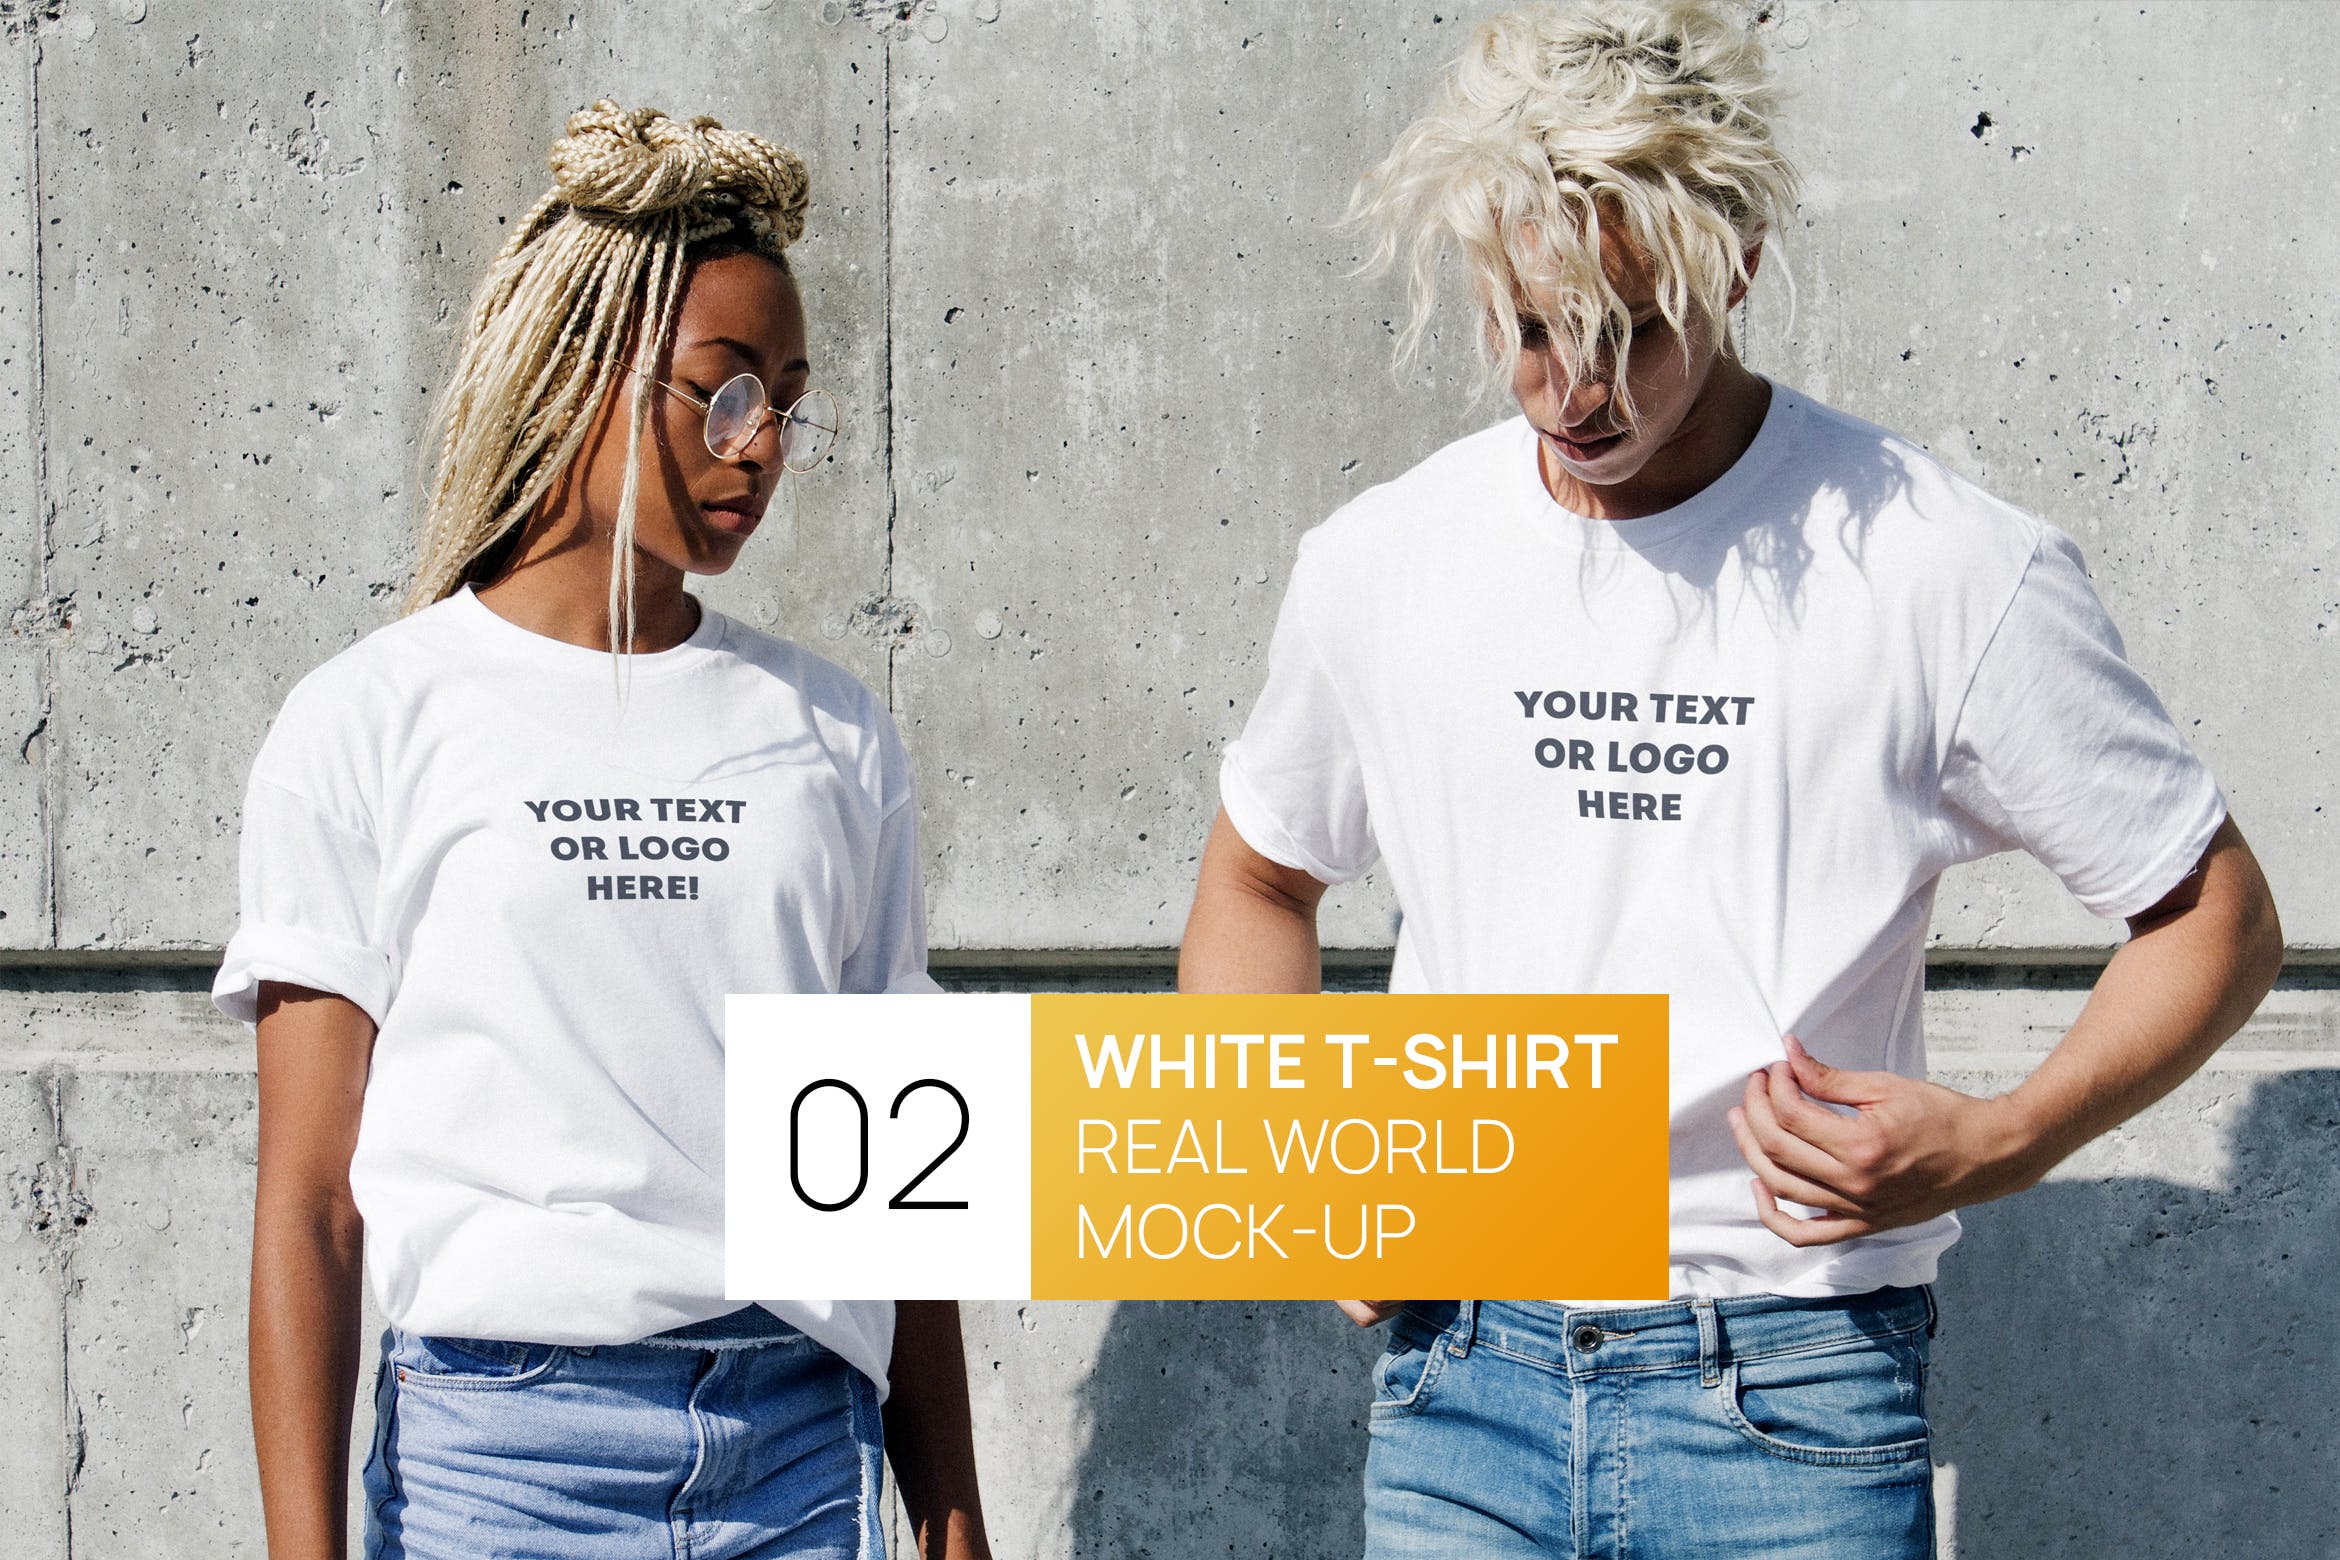 情侣T恤服装设计效果图样机第一素材精选 Two Persons White T-Shirt Real World Photo Mock-up插图